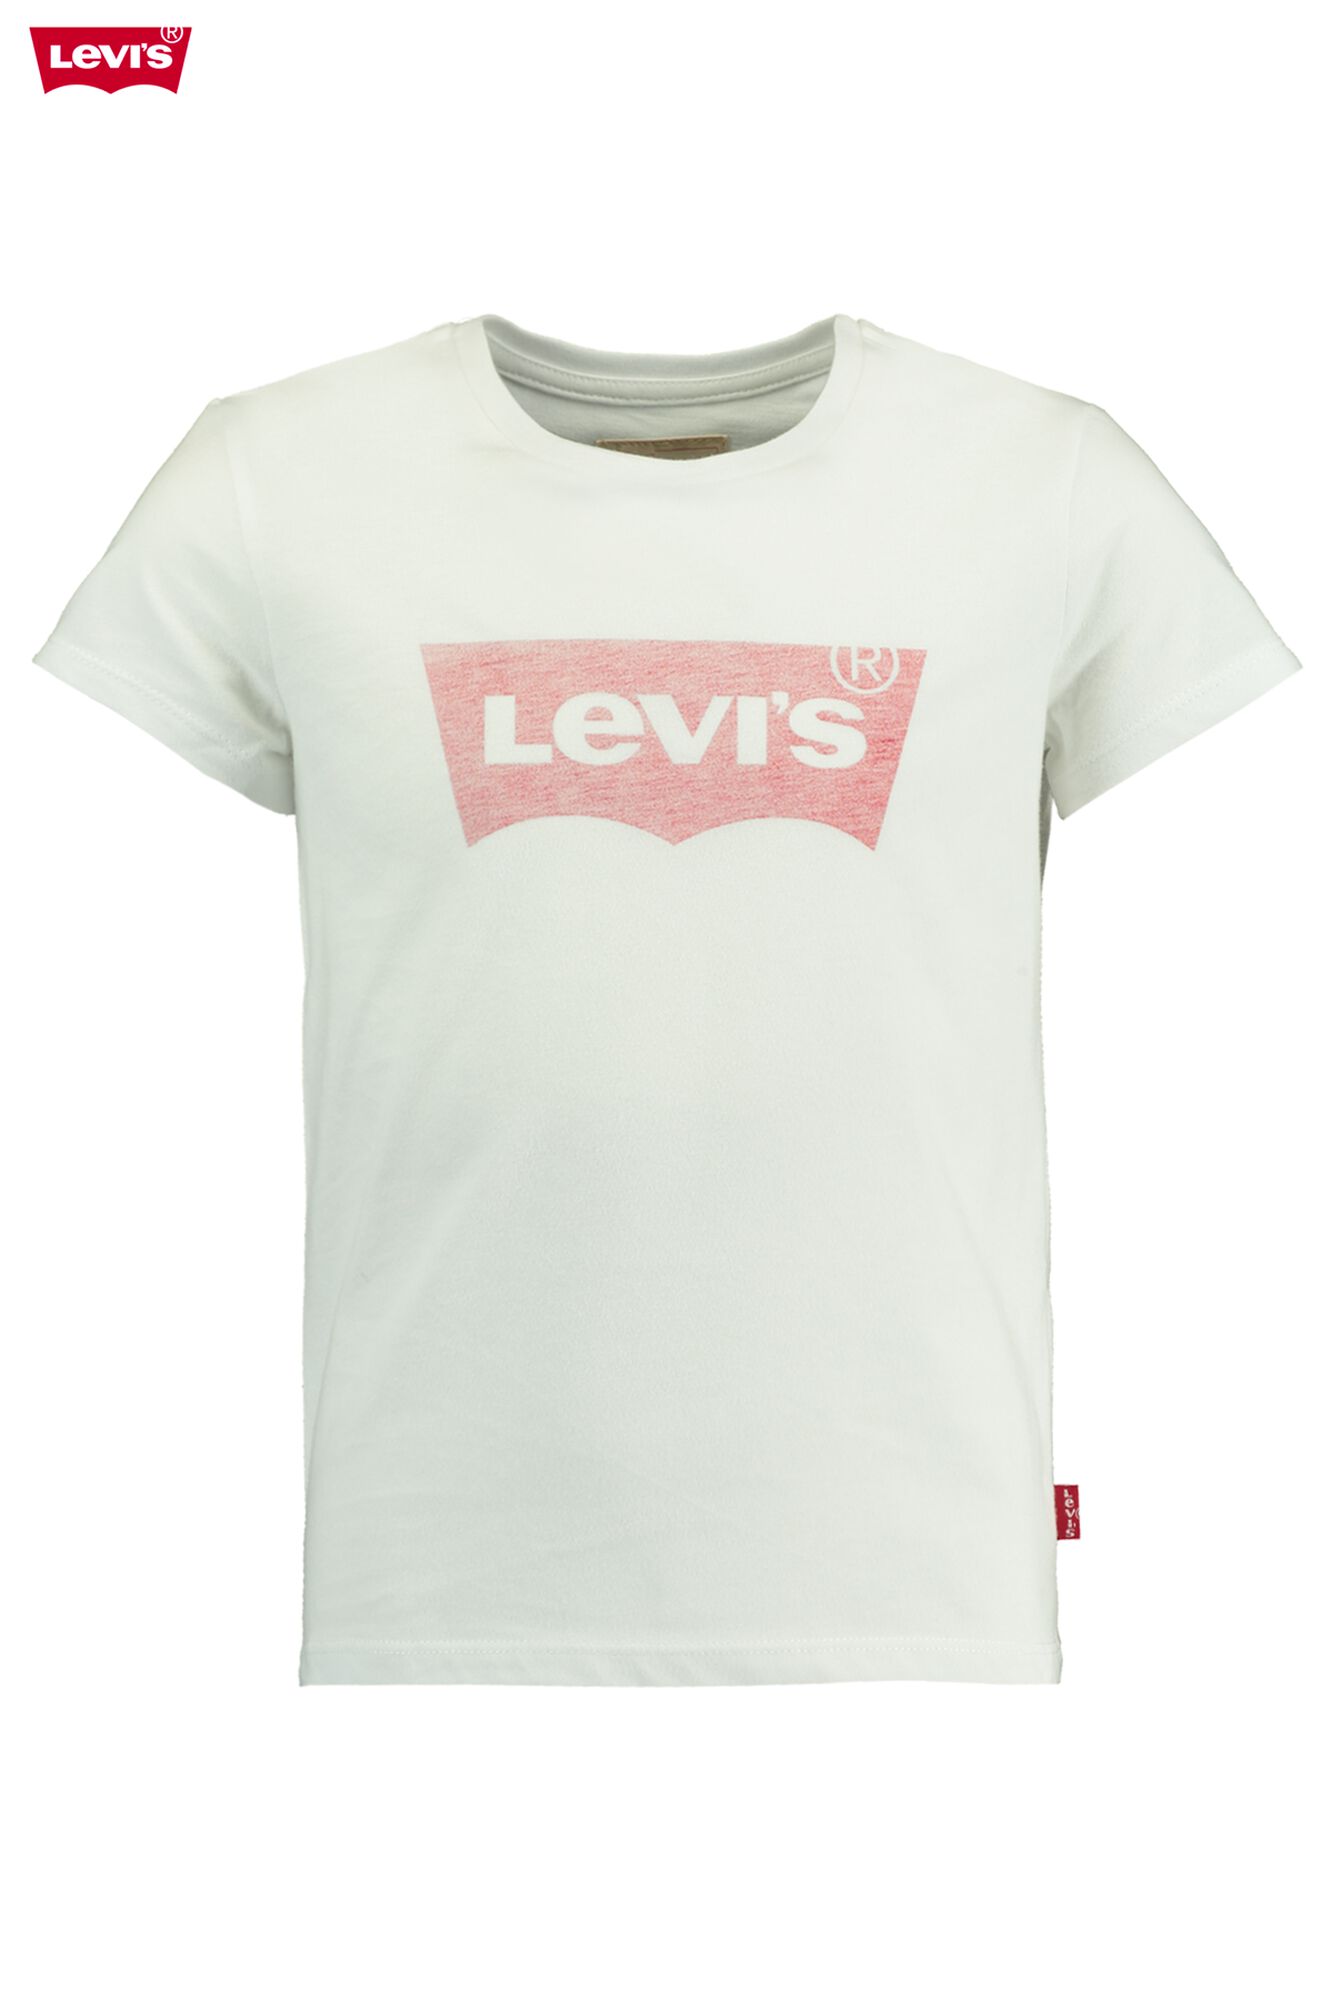 Girls T-shirt Levi's Make Red Buy Online